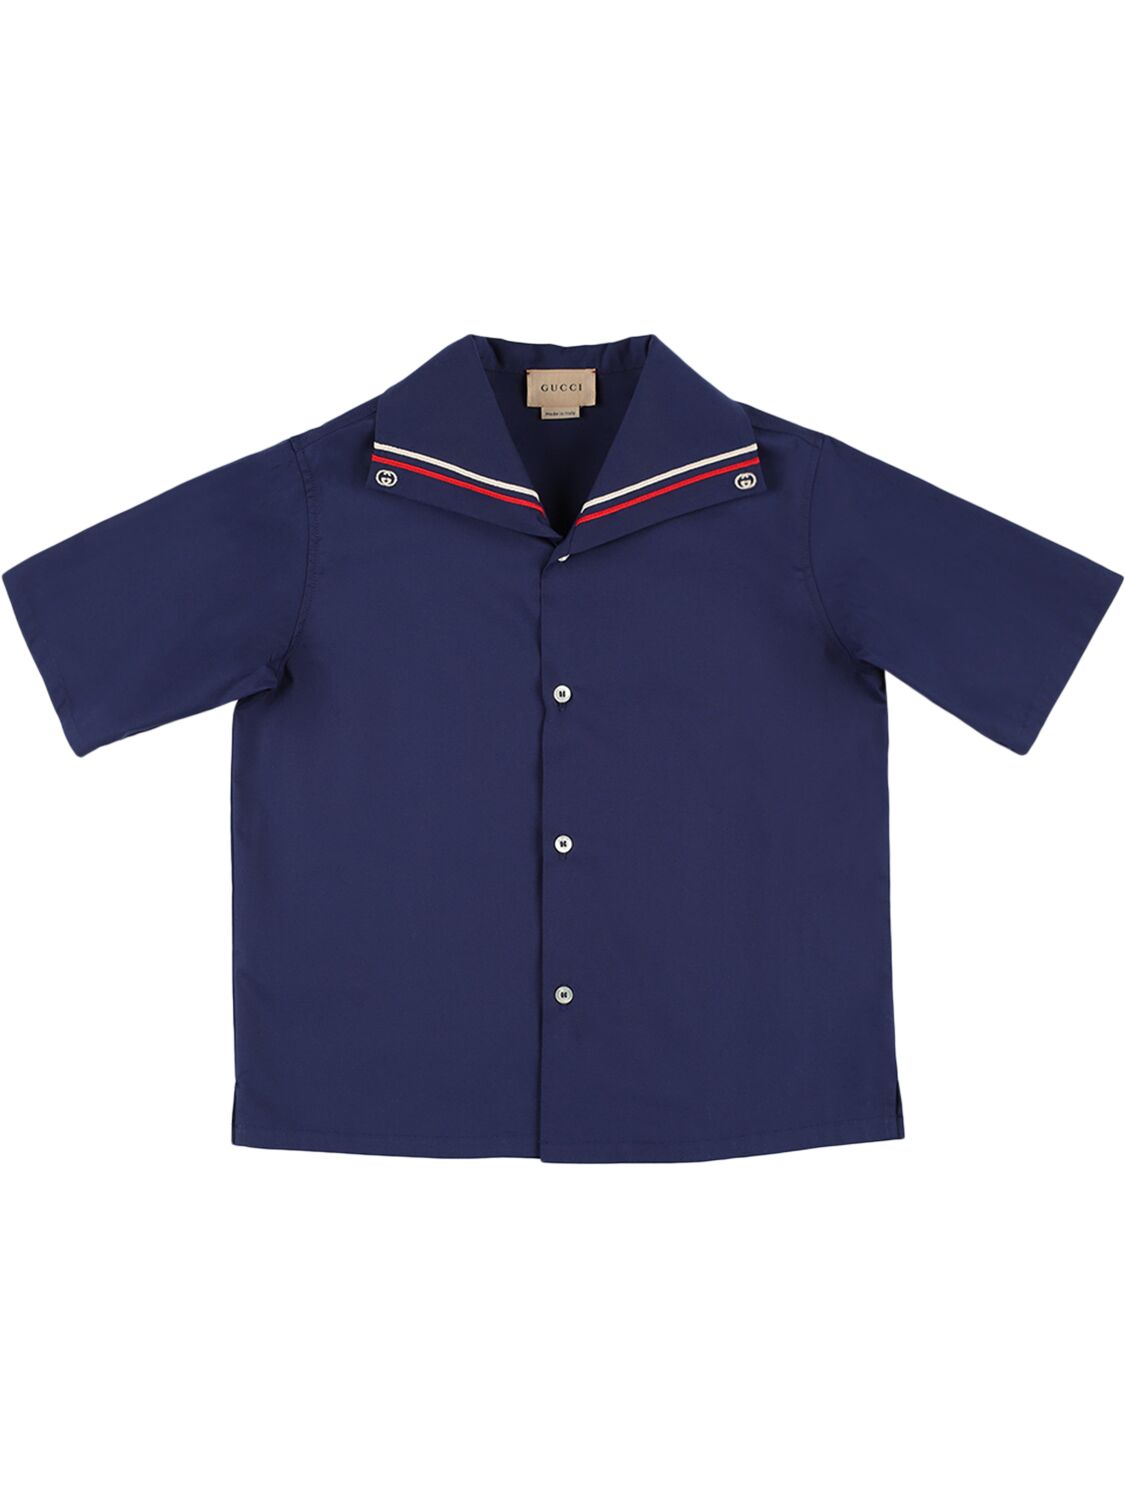 Gucci Kids' Cotton Blend Polo Shirt In Urban Blue